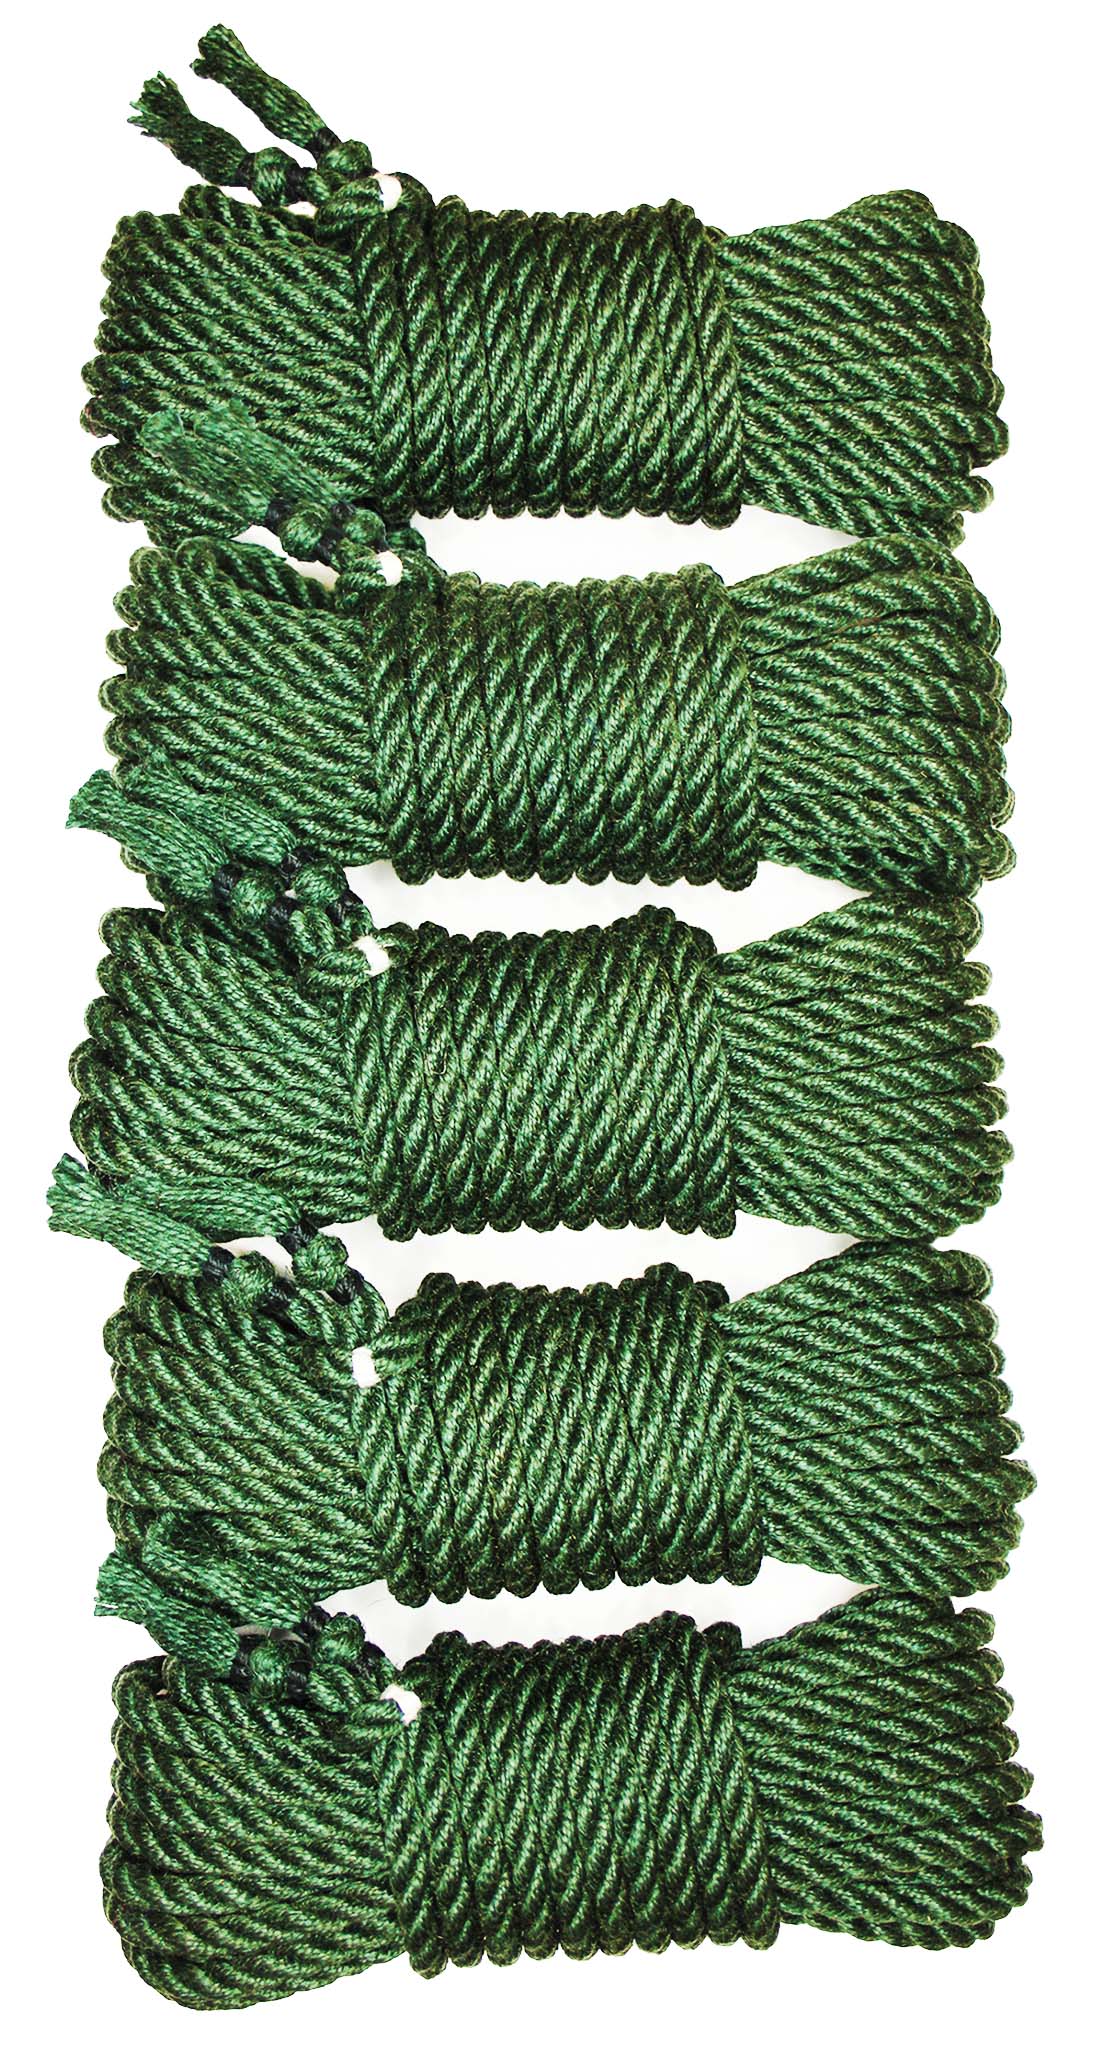 Green stuff ropes